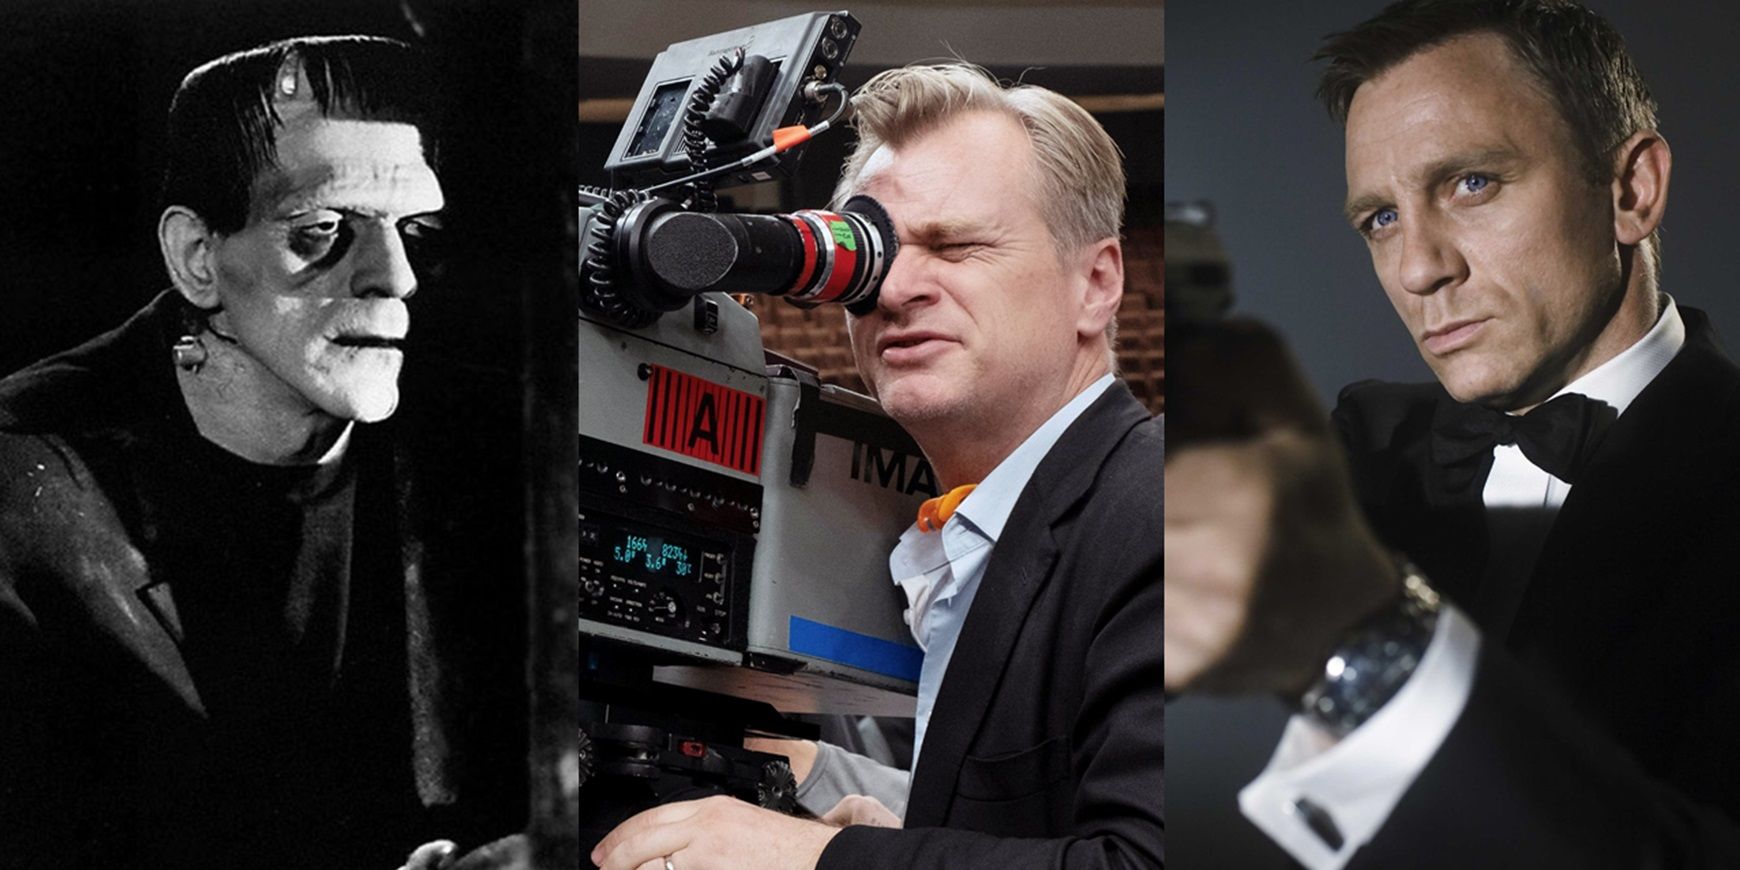 Christopher Nolan, James Bond, and Frankenstein's monster